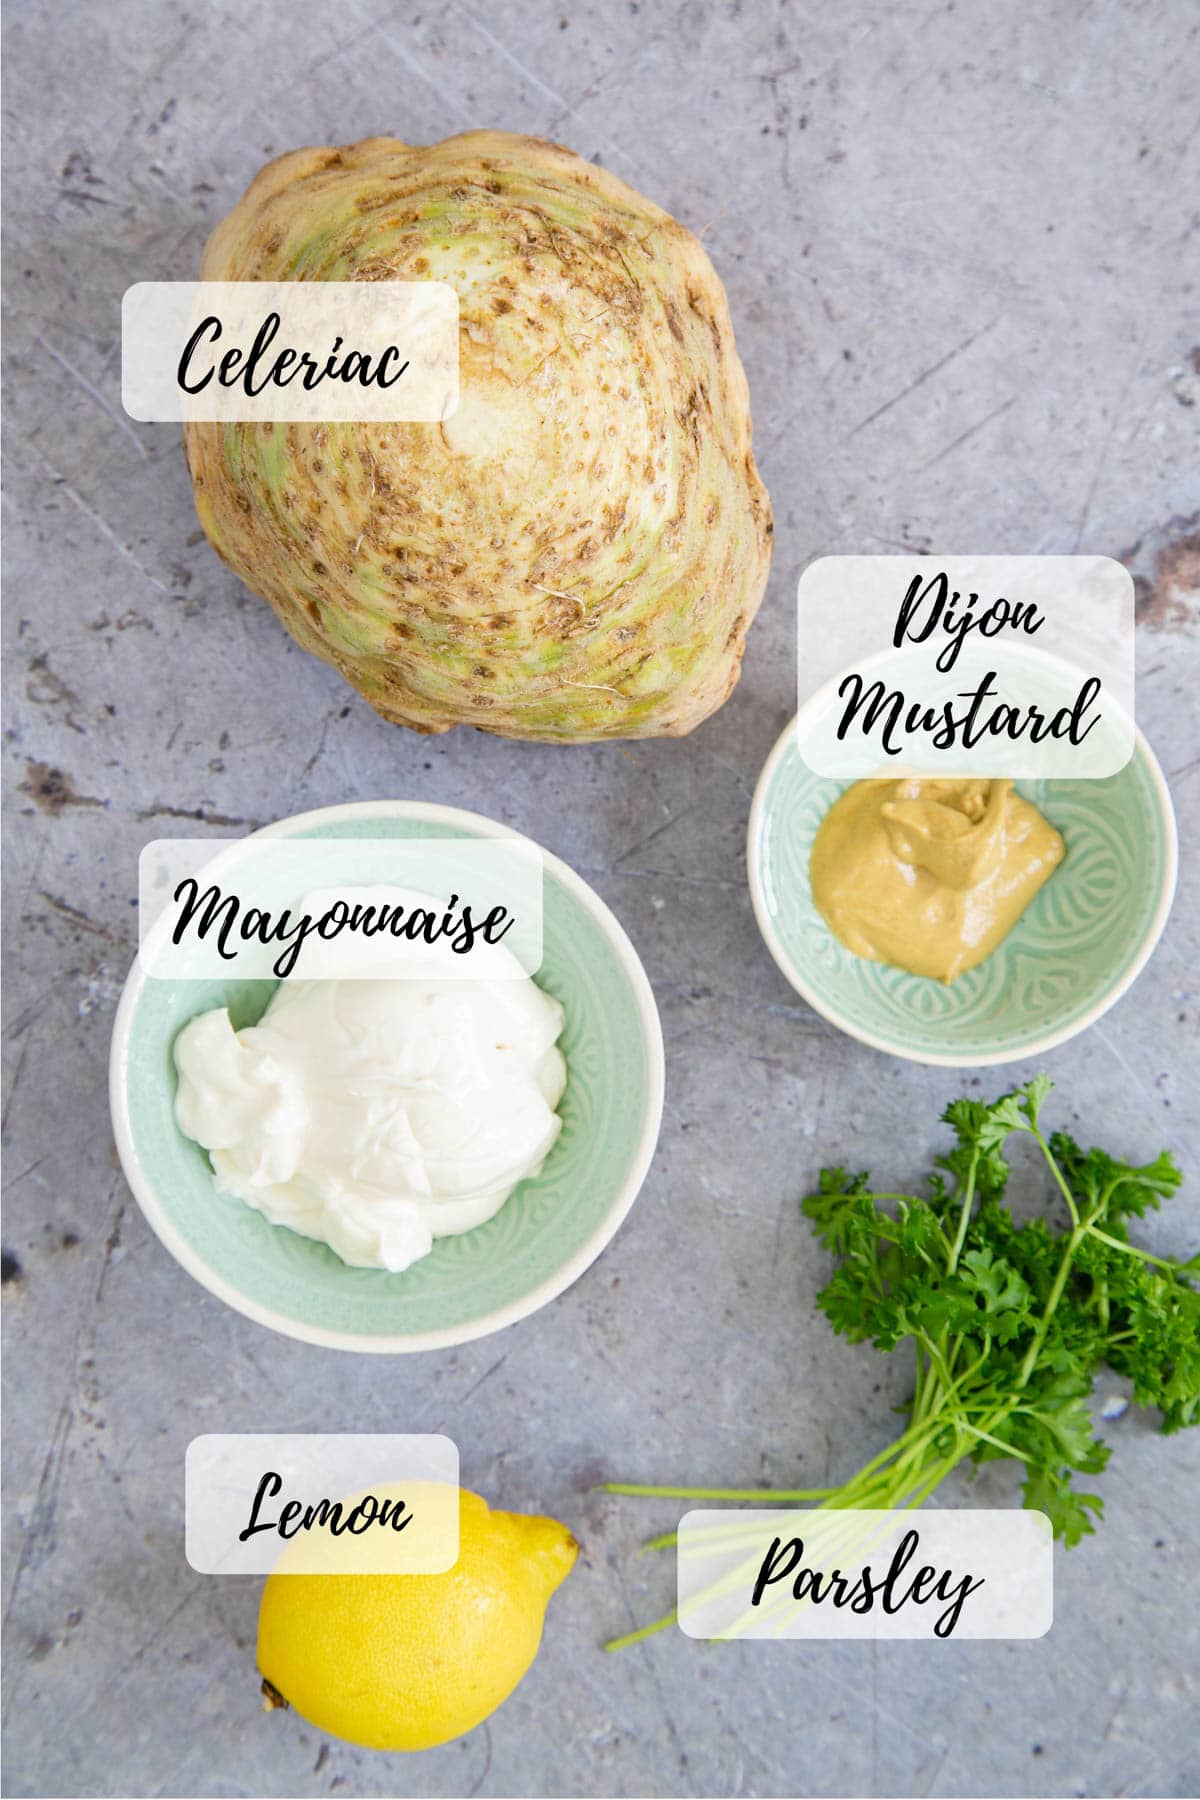 Ingredients for celeriac remoulade: celeriac, Dijon mustard, parsley, a lemon, mayonnaise